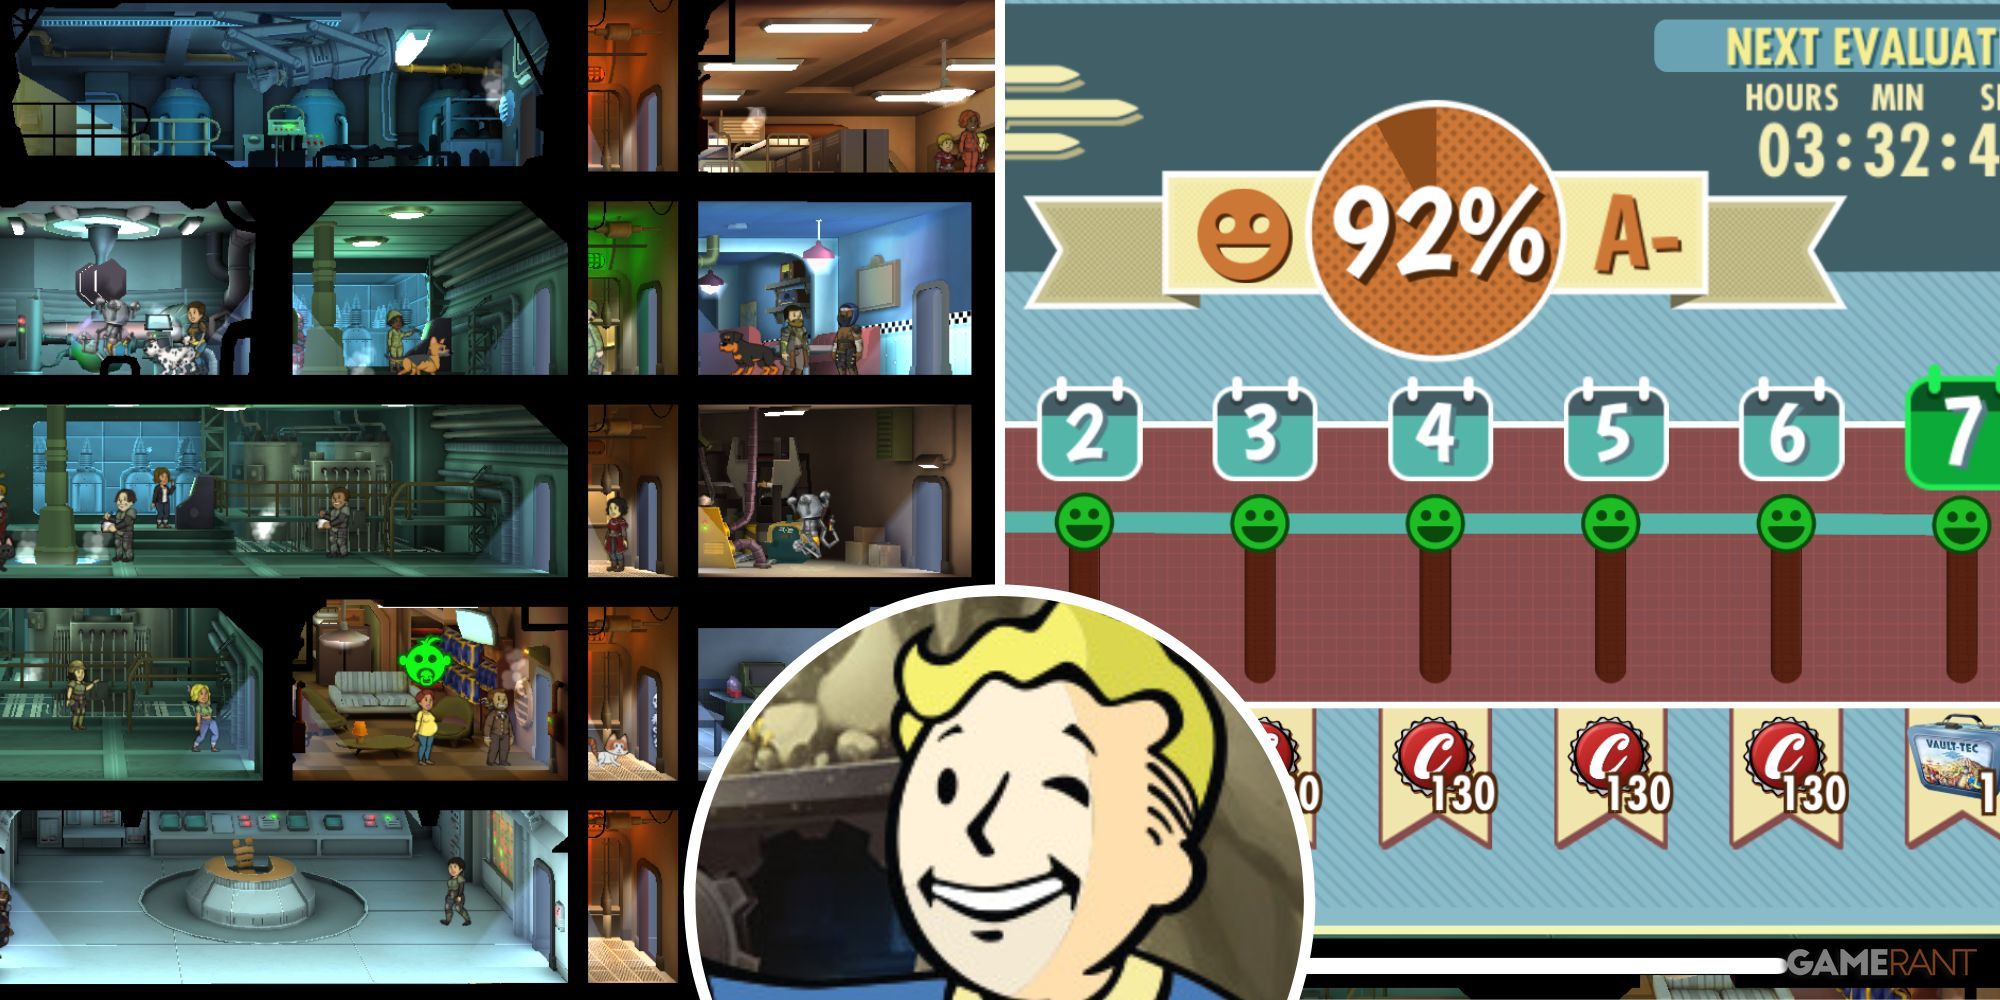 Fallout Shelter - Vault, Vault Boy, and Vault Rating